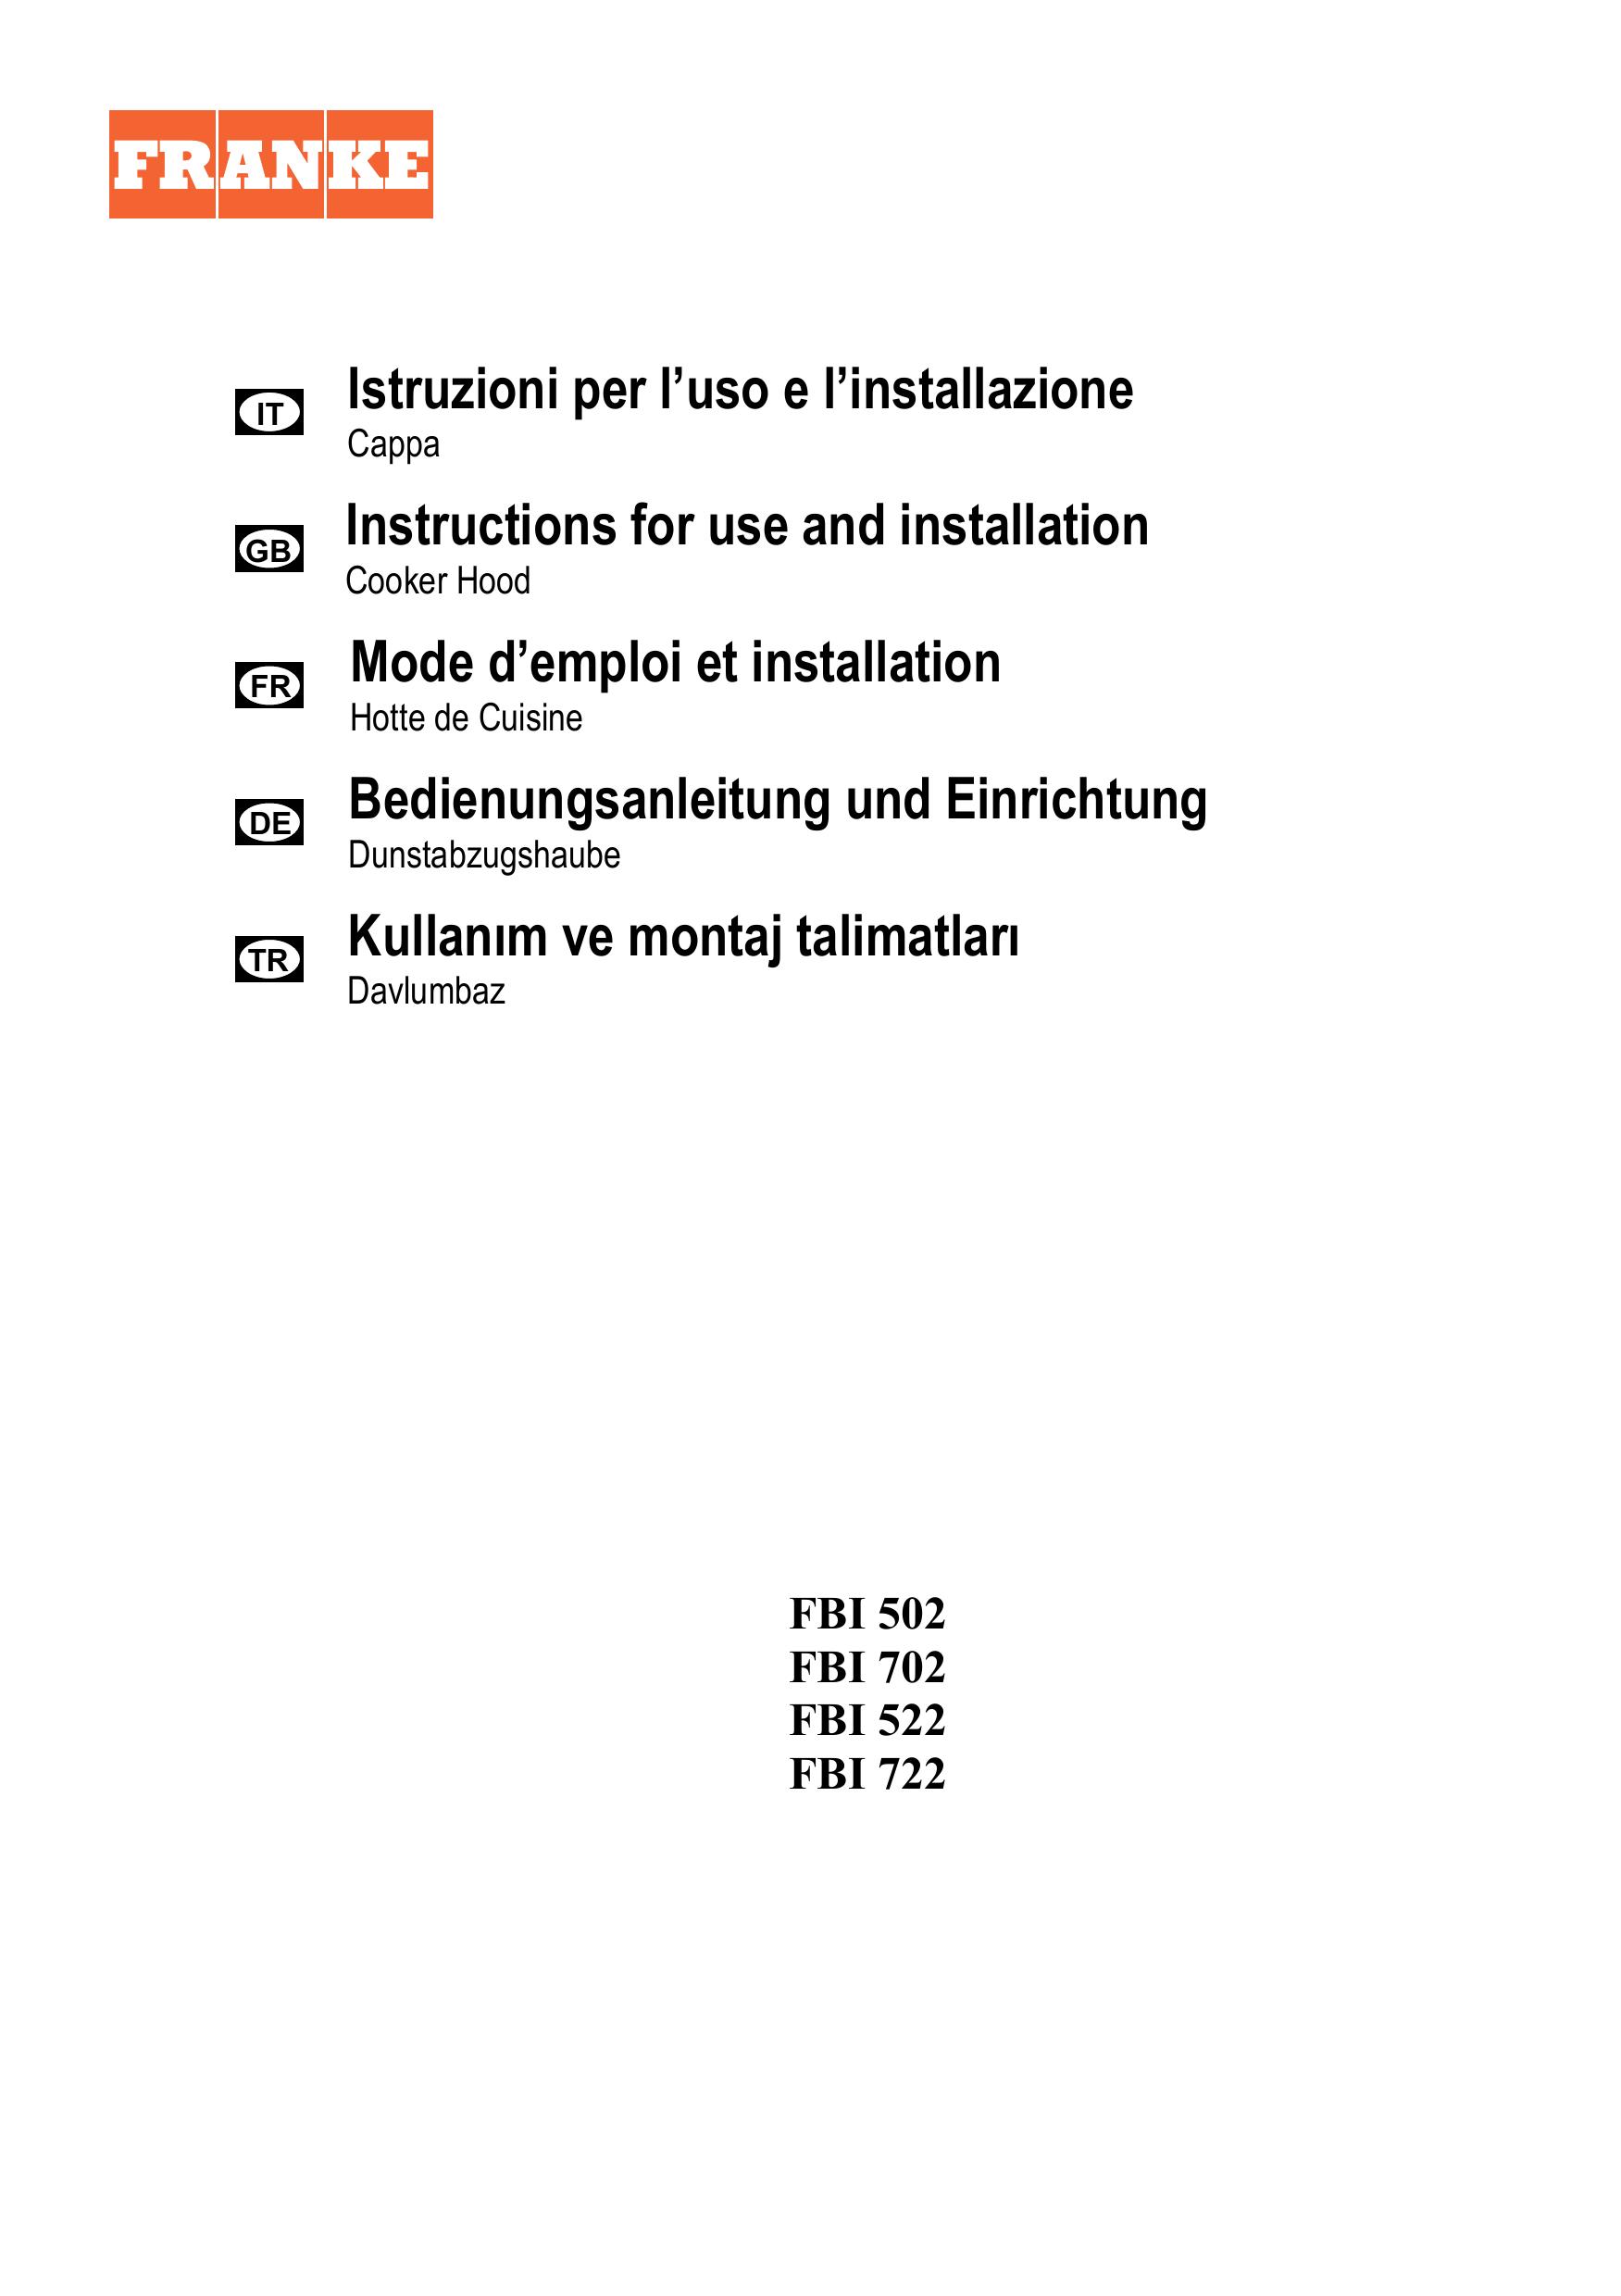 Franke Consumer Products FBI 522 Ventilation Hood User Manual